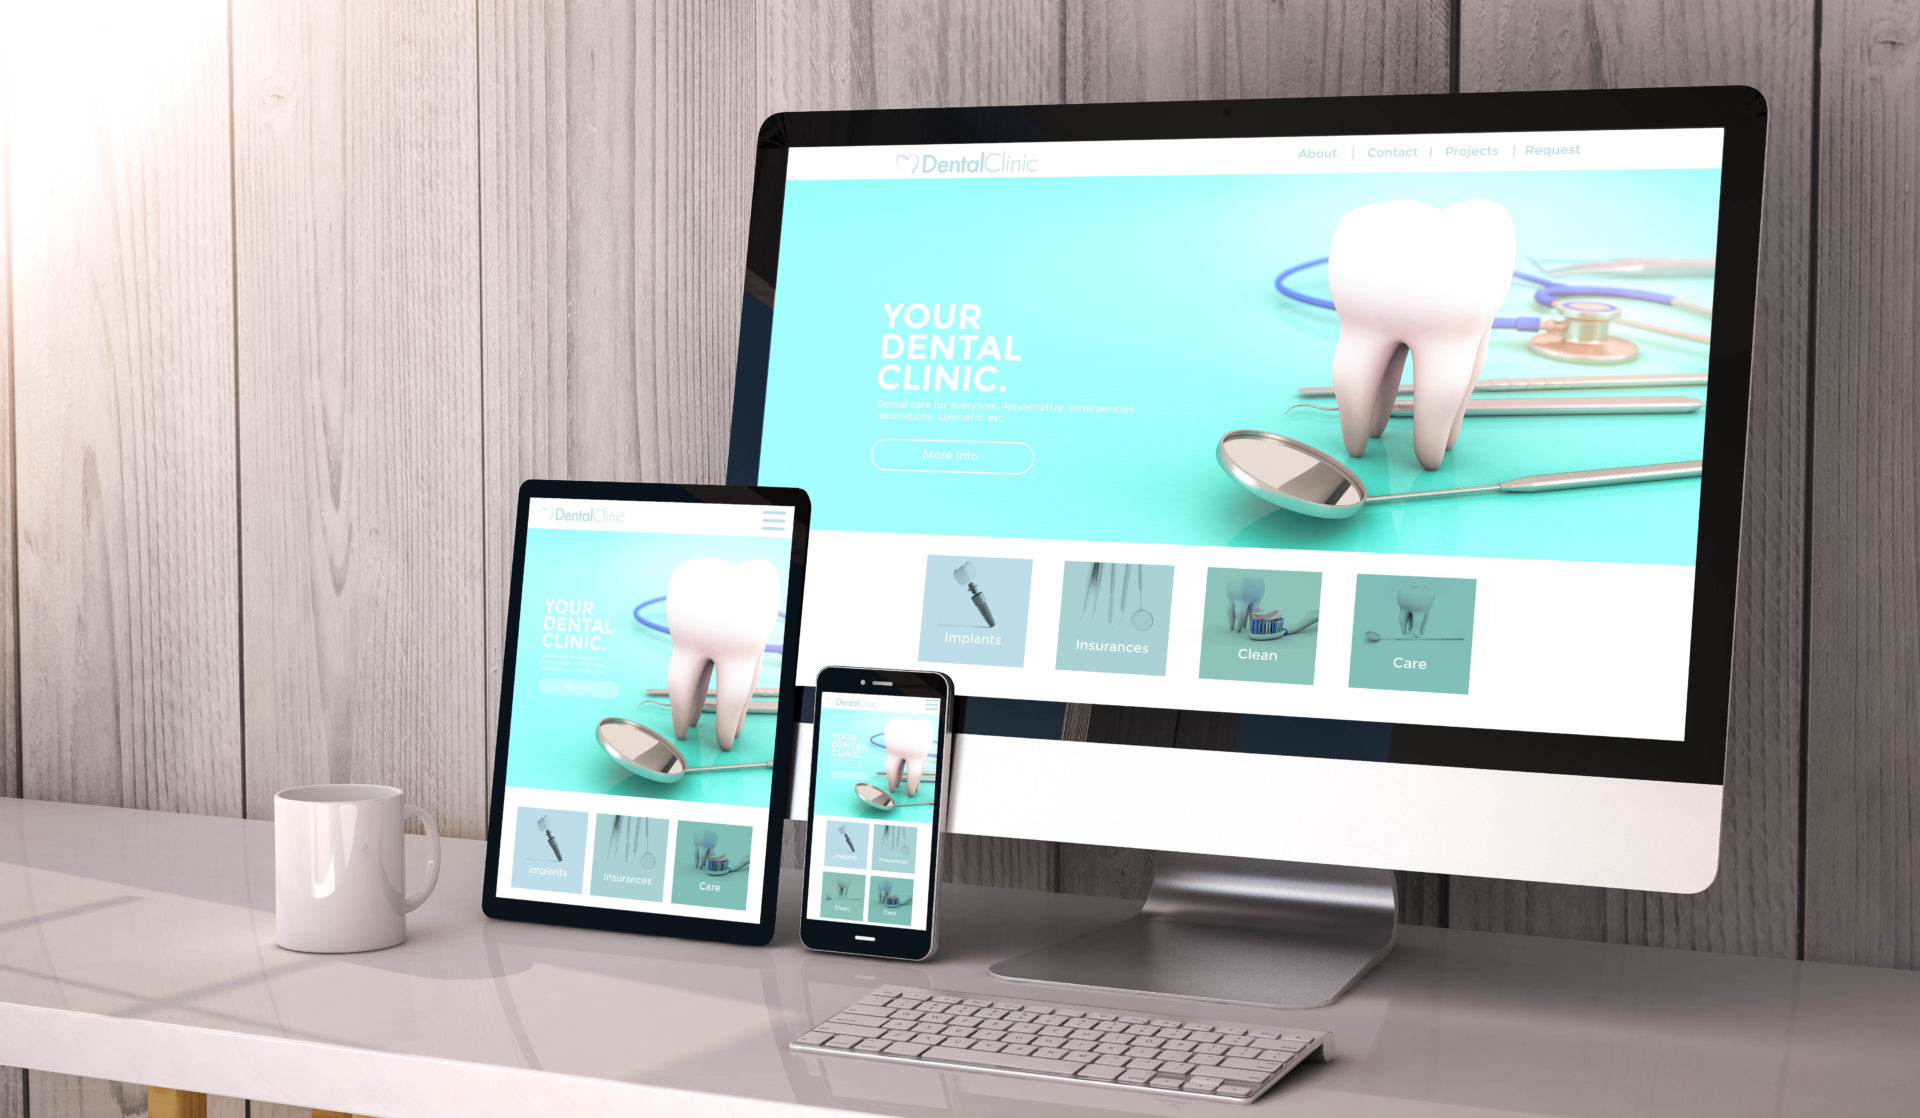 Trident dental sites in desktop and mobiles